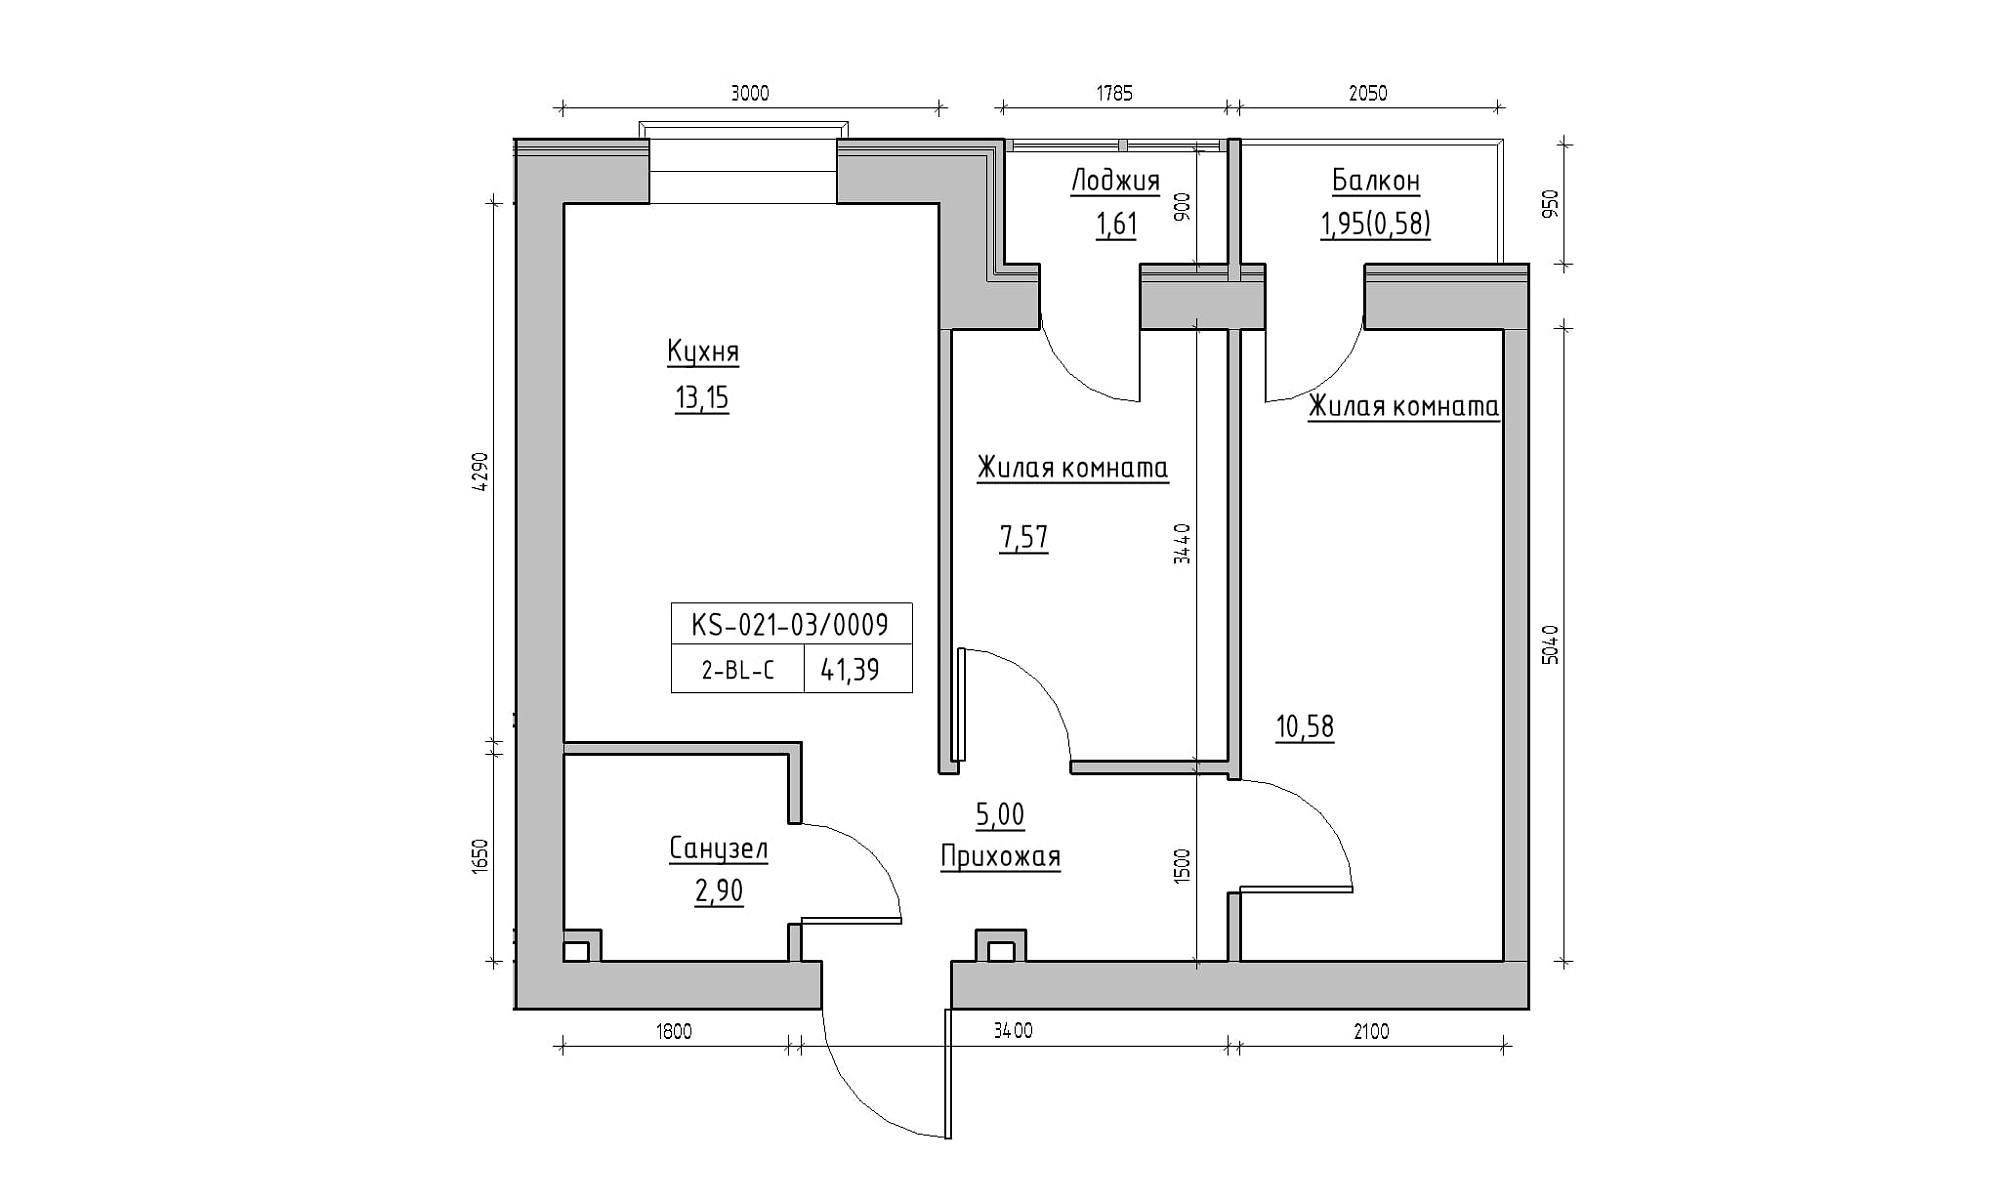 Planning 2-rm flats area 41.39m2, KS-021-03/0009.